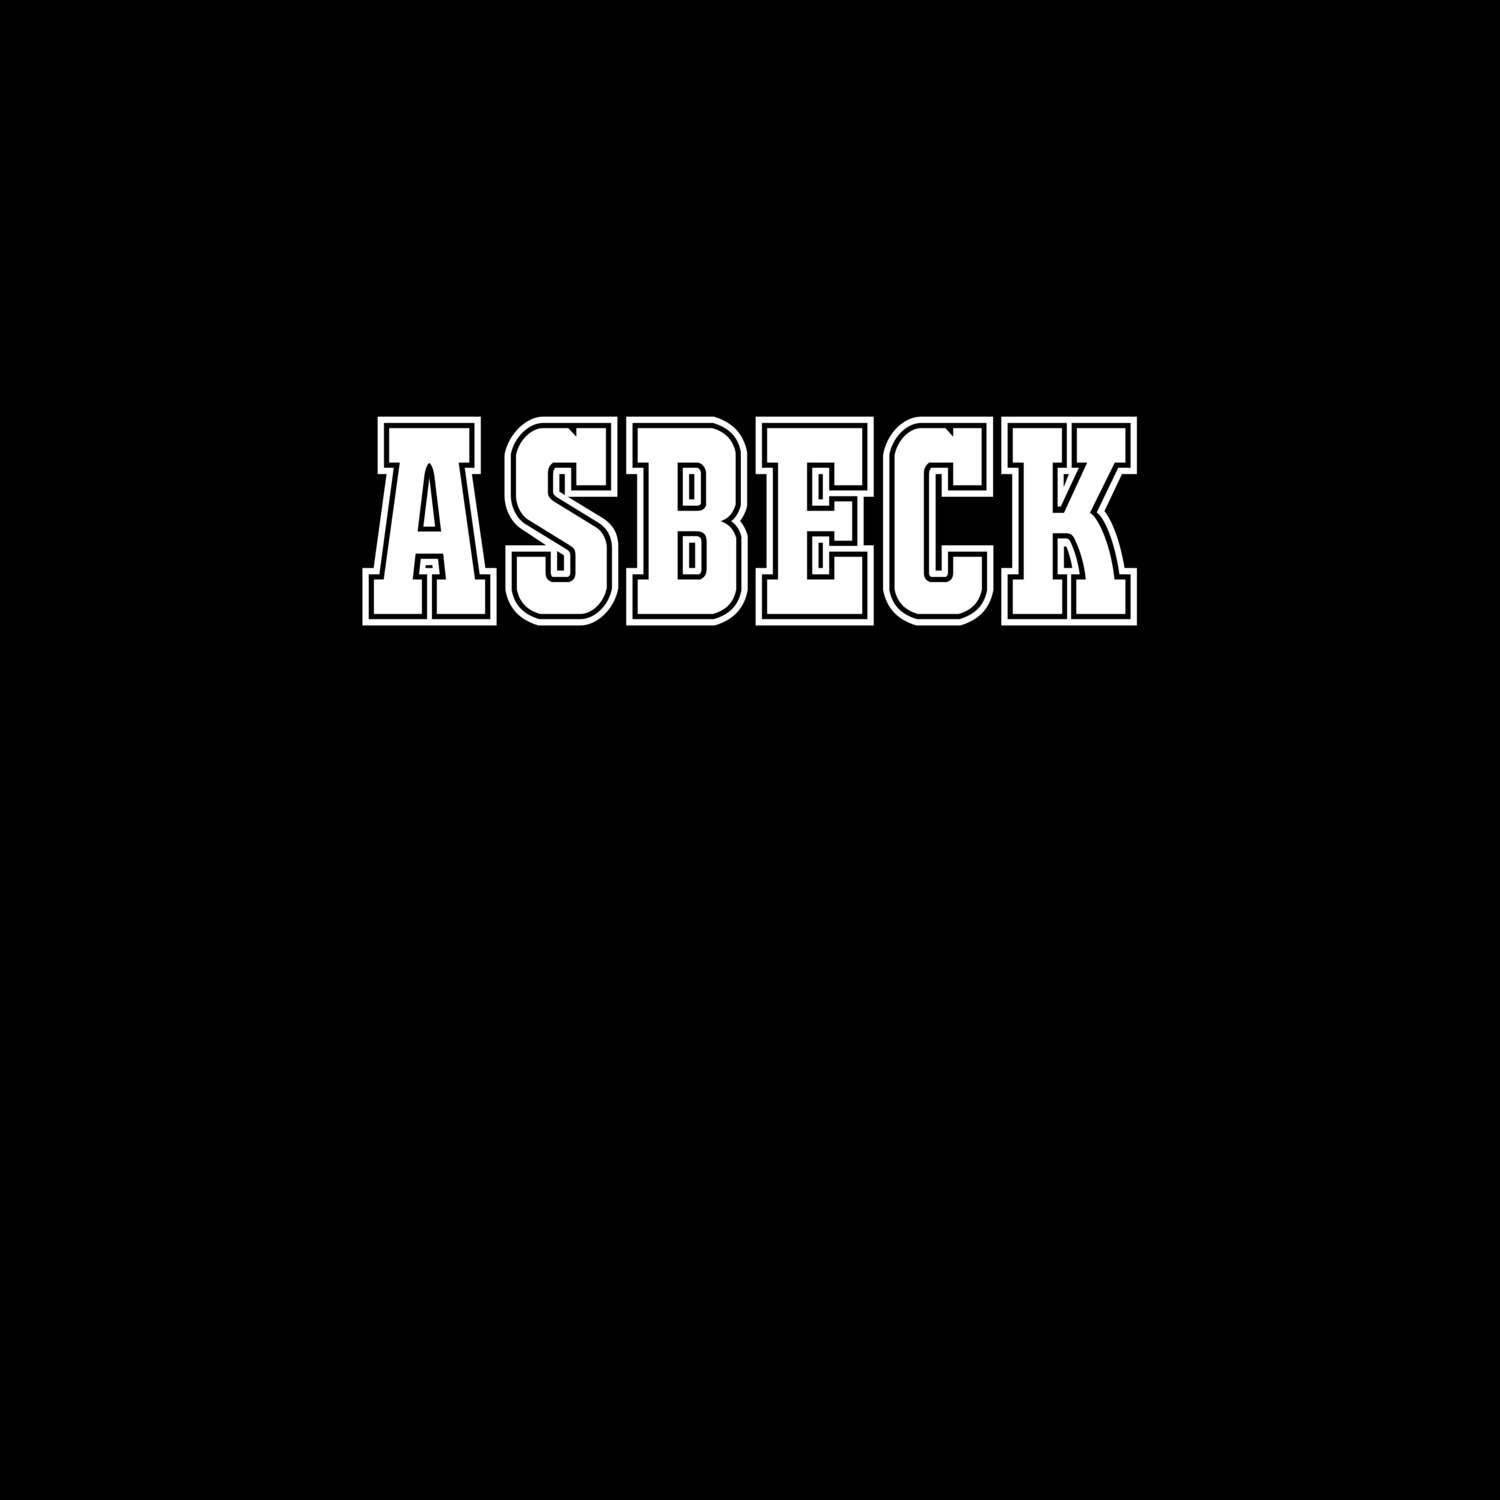 Asbeck T-Shirt »Classic«